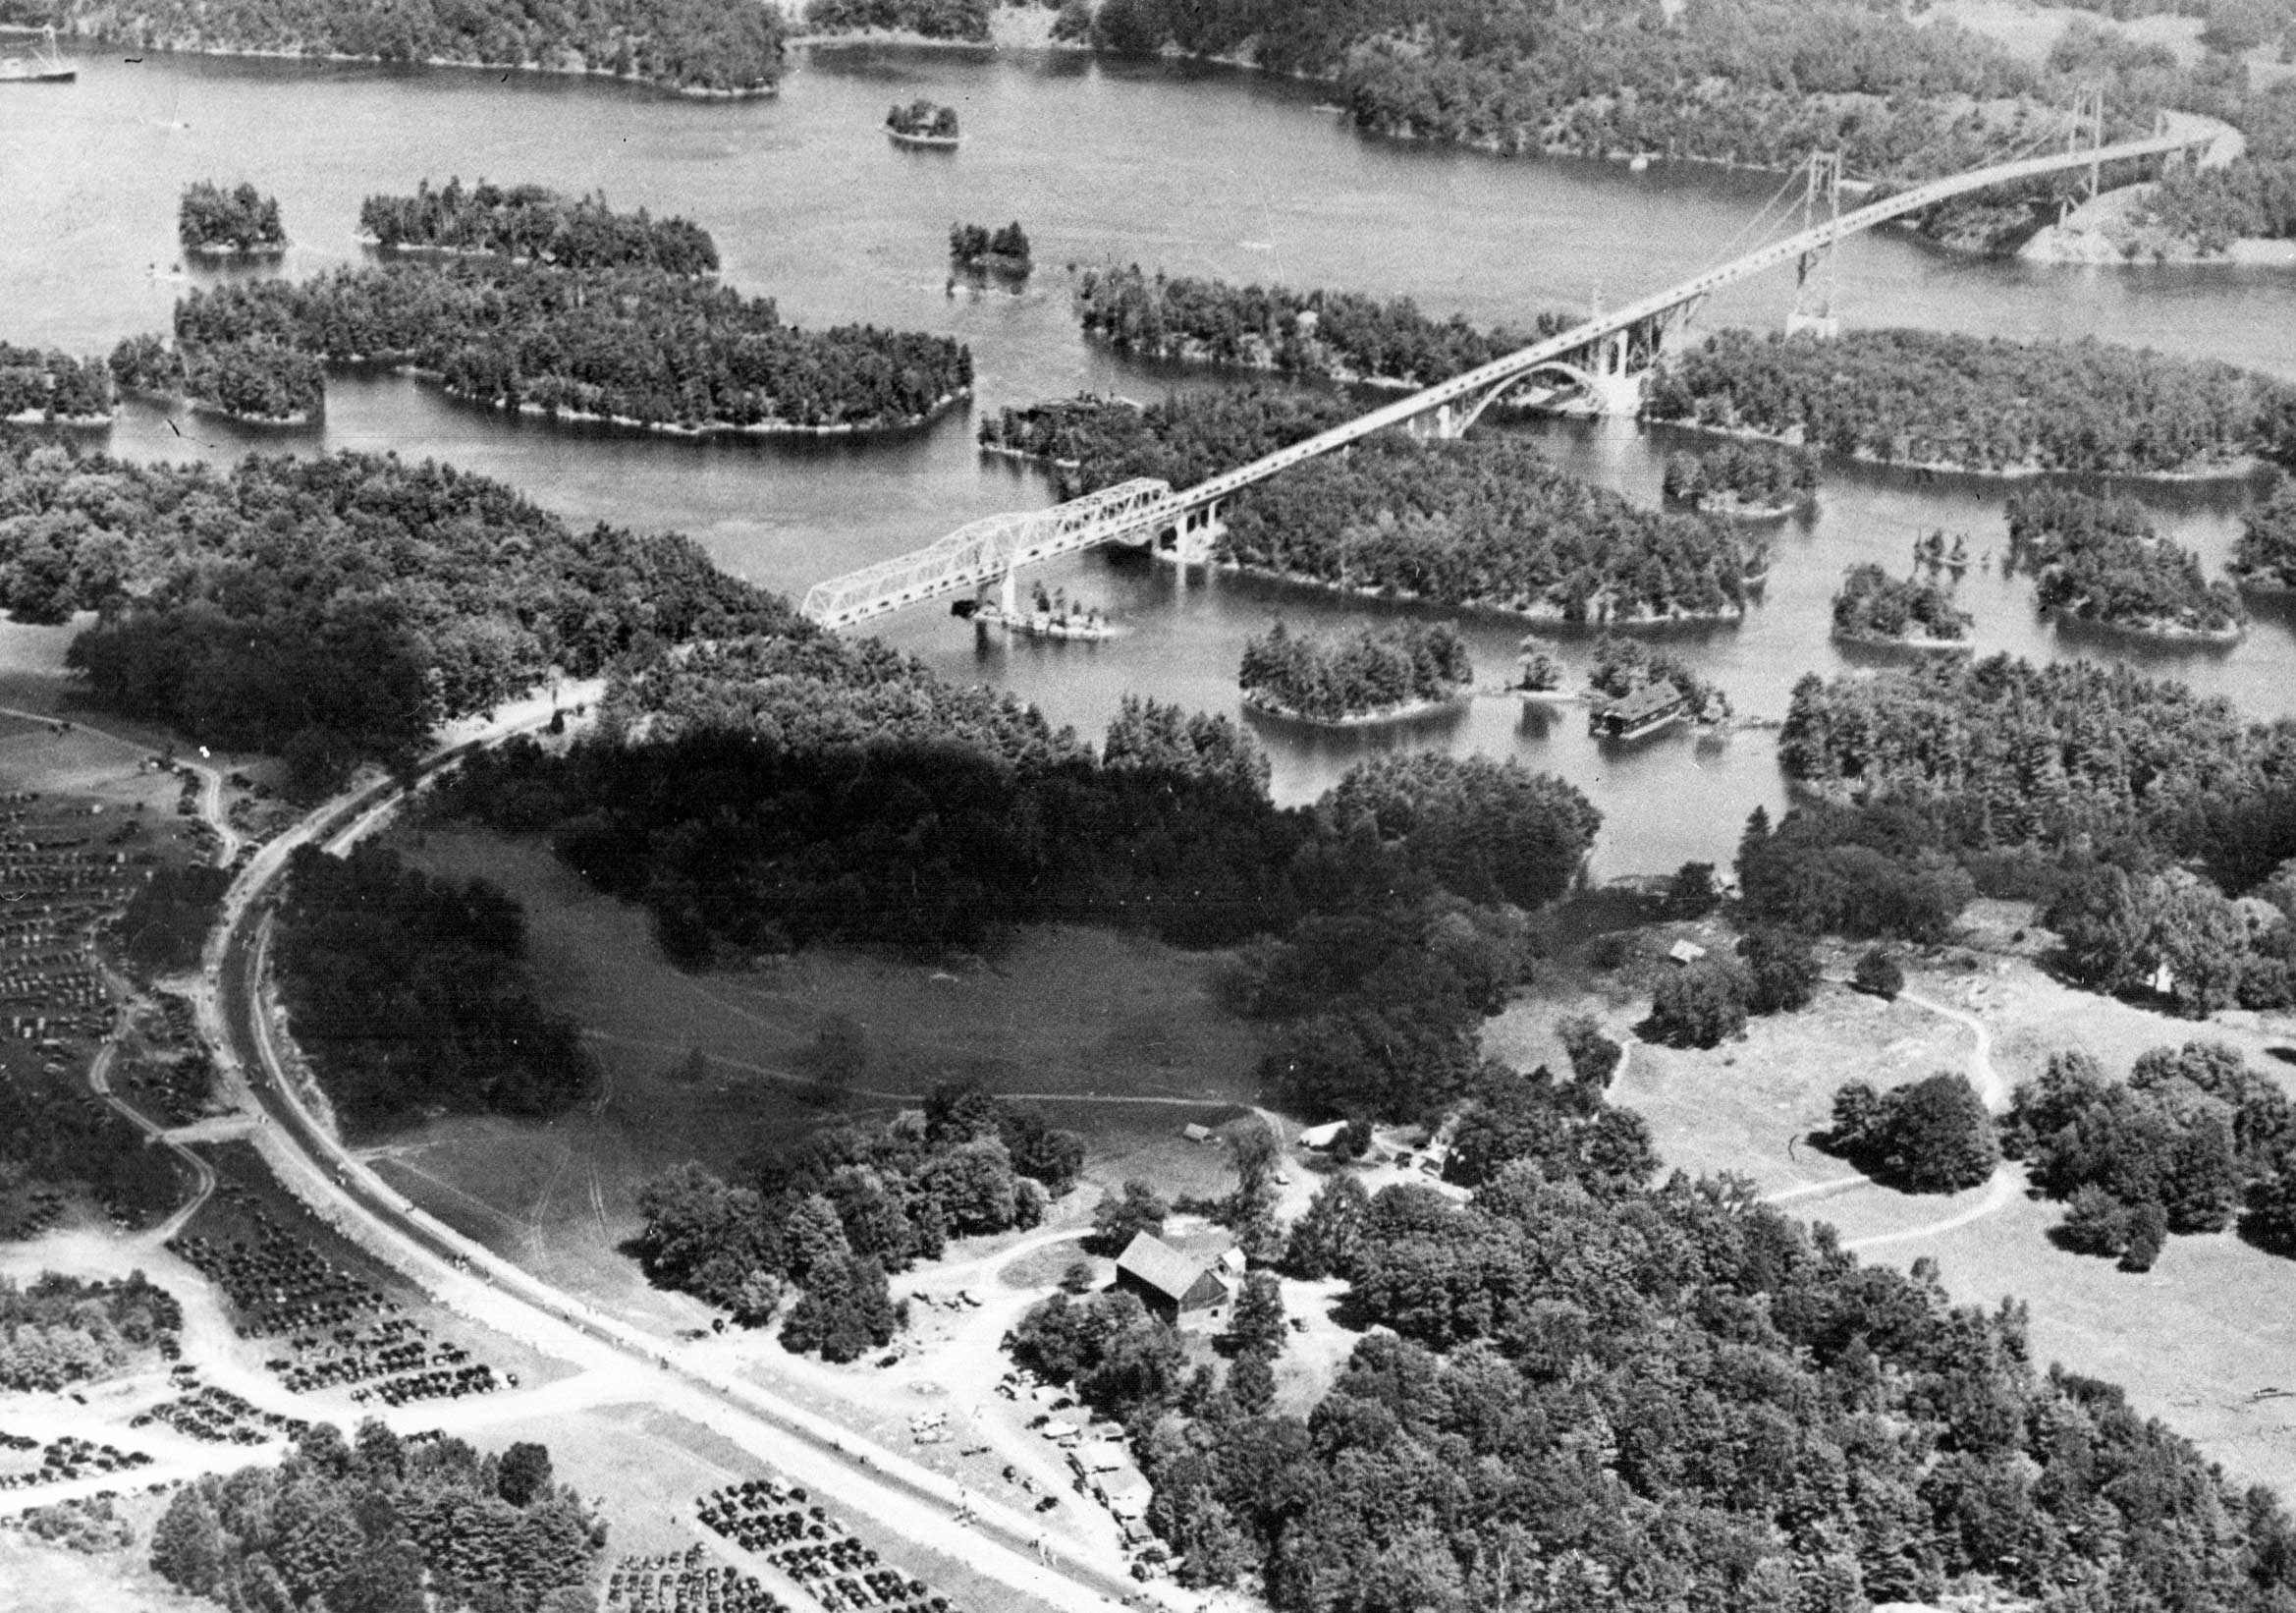 Thousand Islands national park bridge and area, Ontario, 1939.